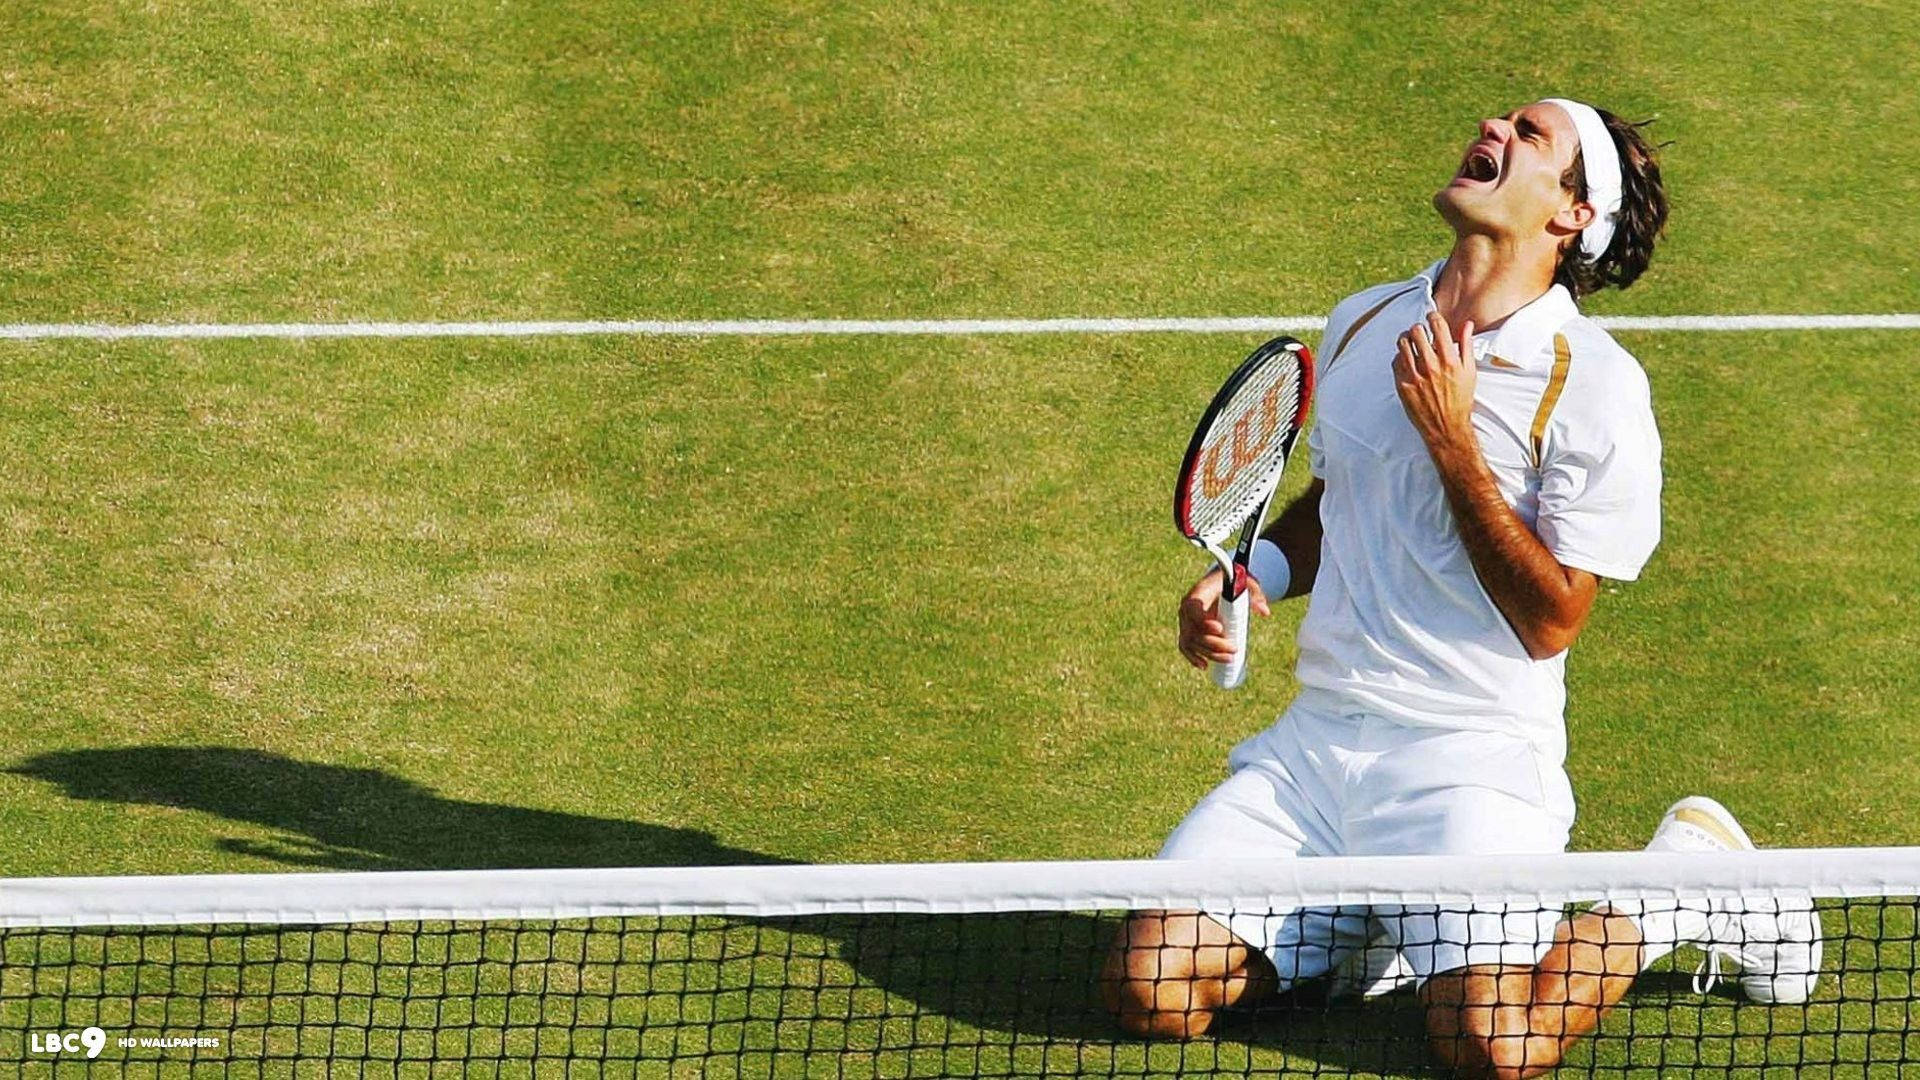 Campeonatode Wimbledon - Roger Federer Papel de Parede